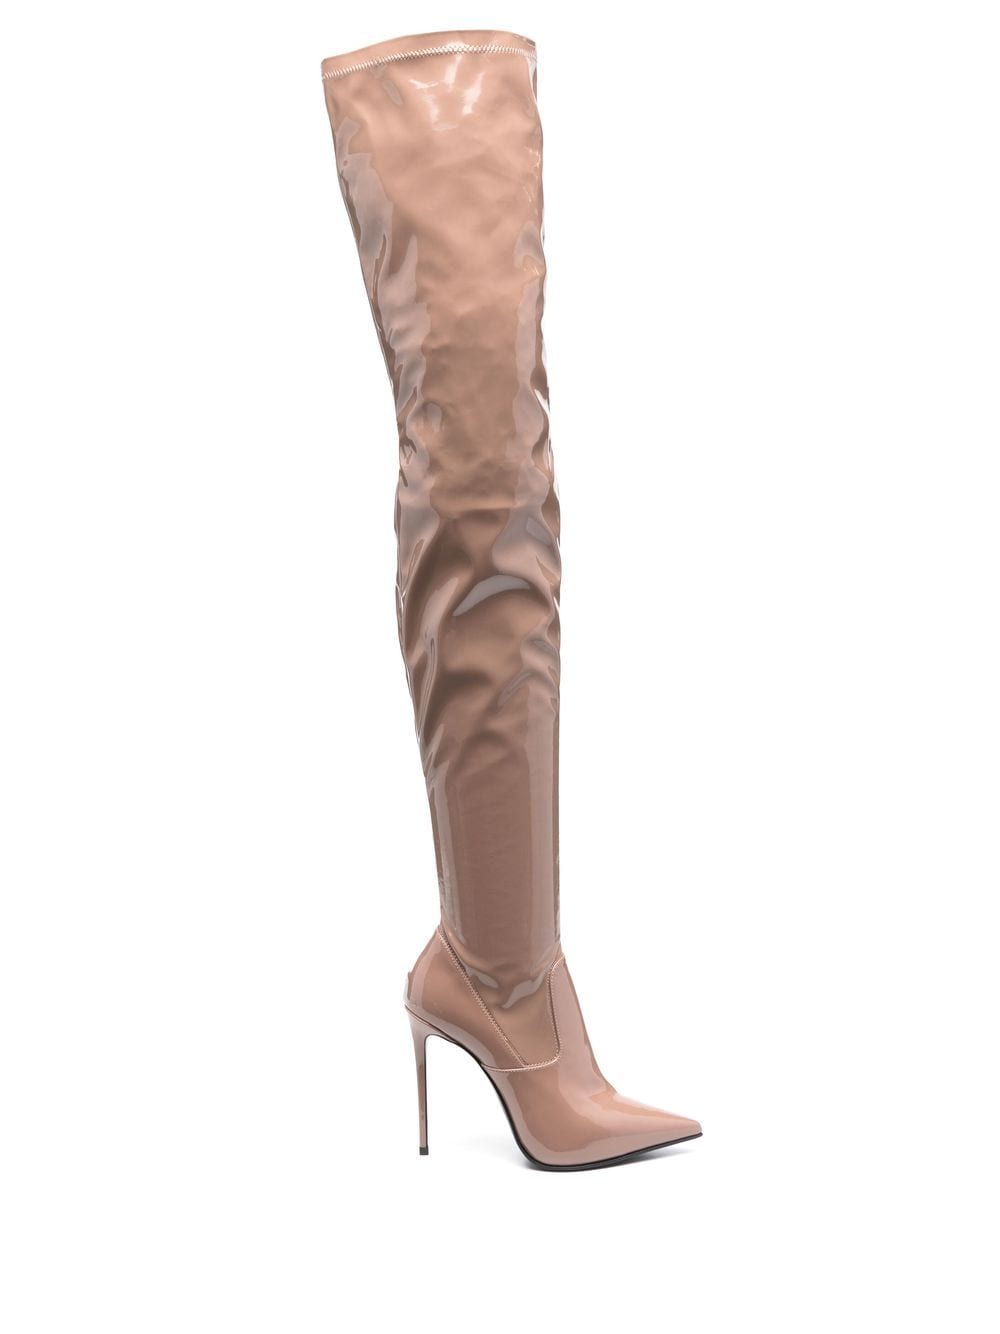 Le Silla Stiefel mit hohem Absatz - Nude von Le Silla